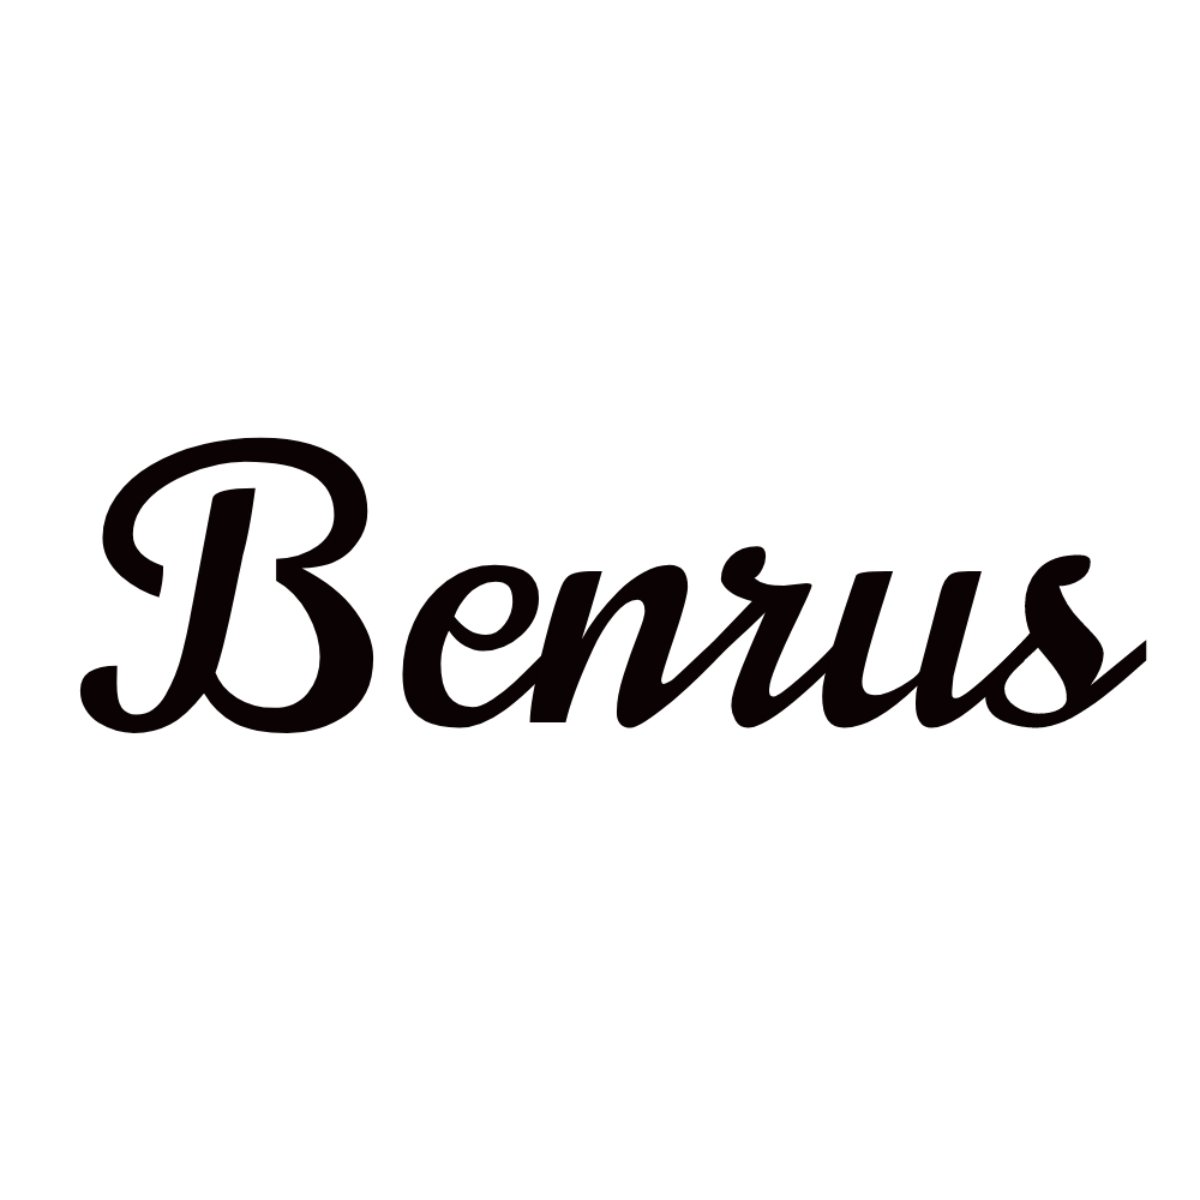 1921 - 1930 Benrus Watch Mark